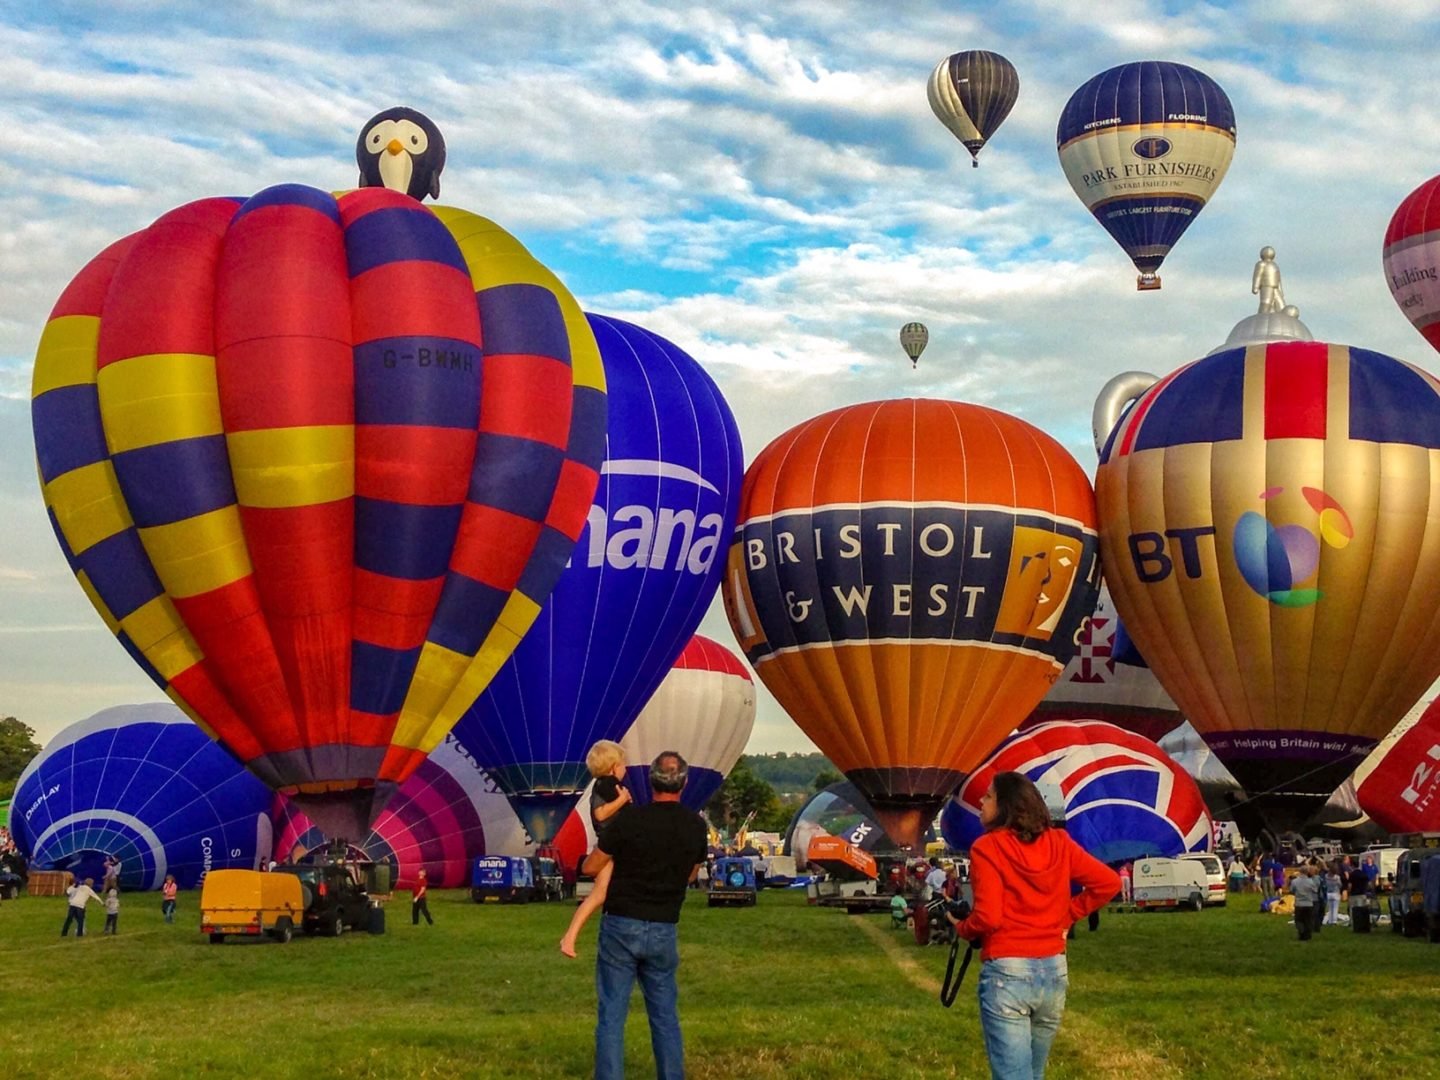 Om toevlucht te zoeken toxiciteit kleurstof Where to take cracking photos of hot air balloons in Bristol